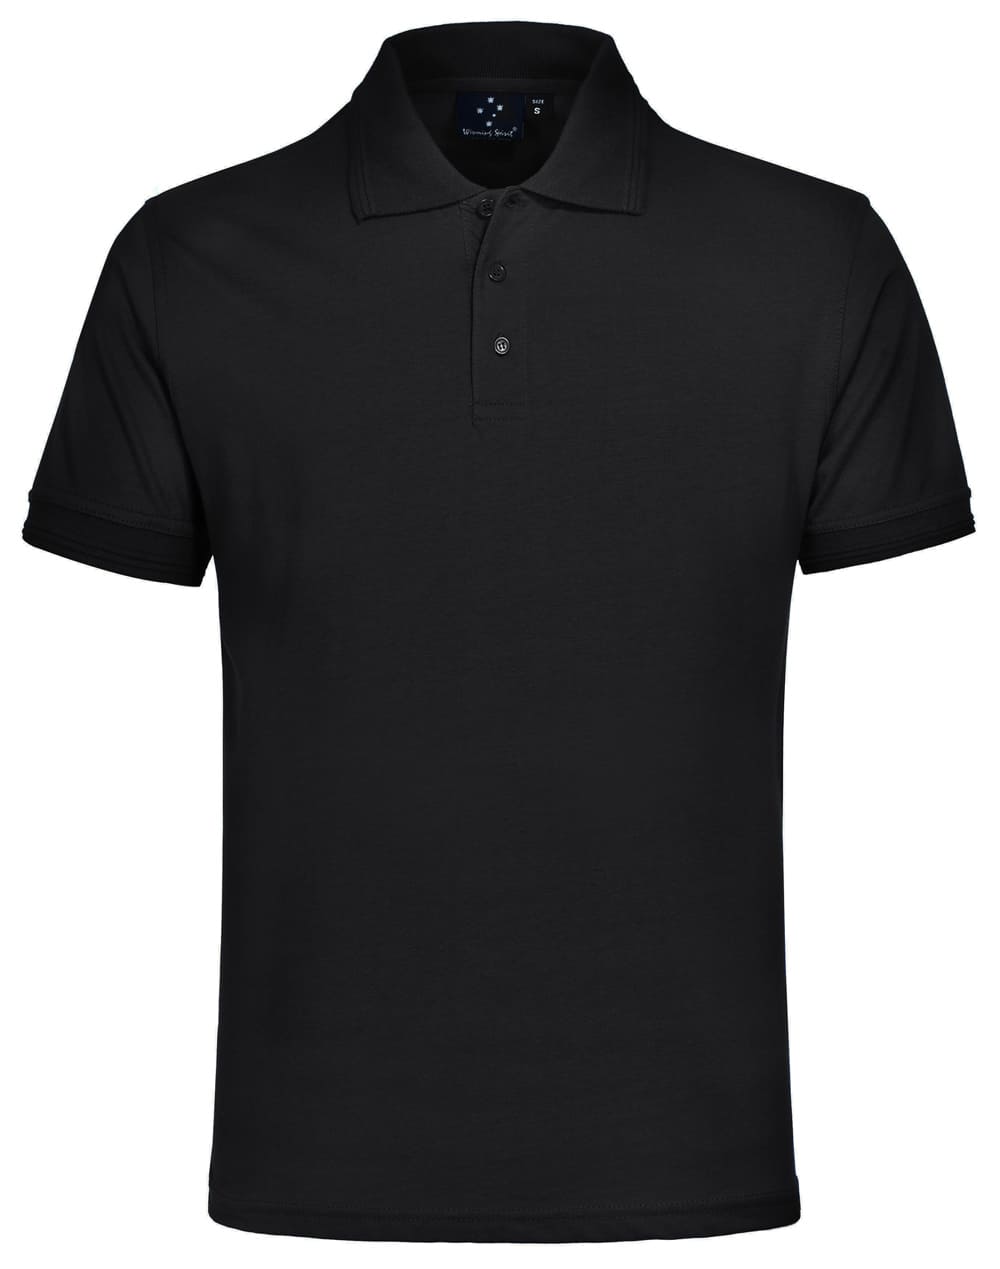 Custom (Black) Macquarie Unisex Cotton Kit Polos Online in Perth